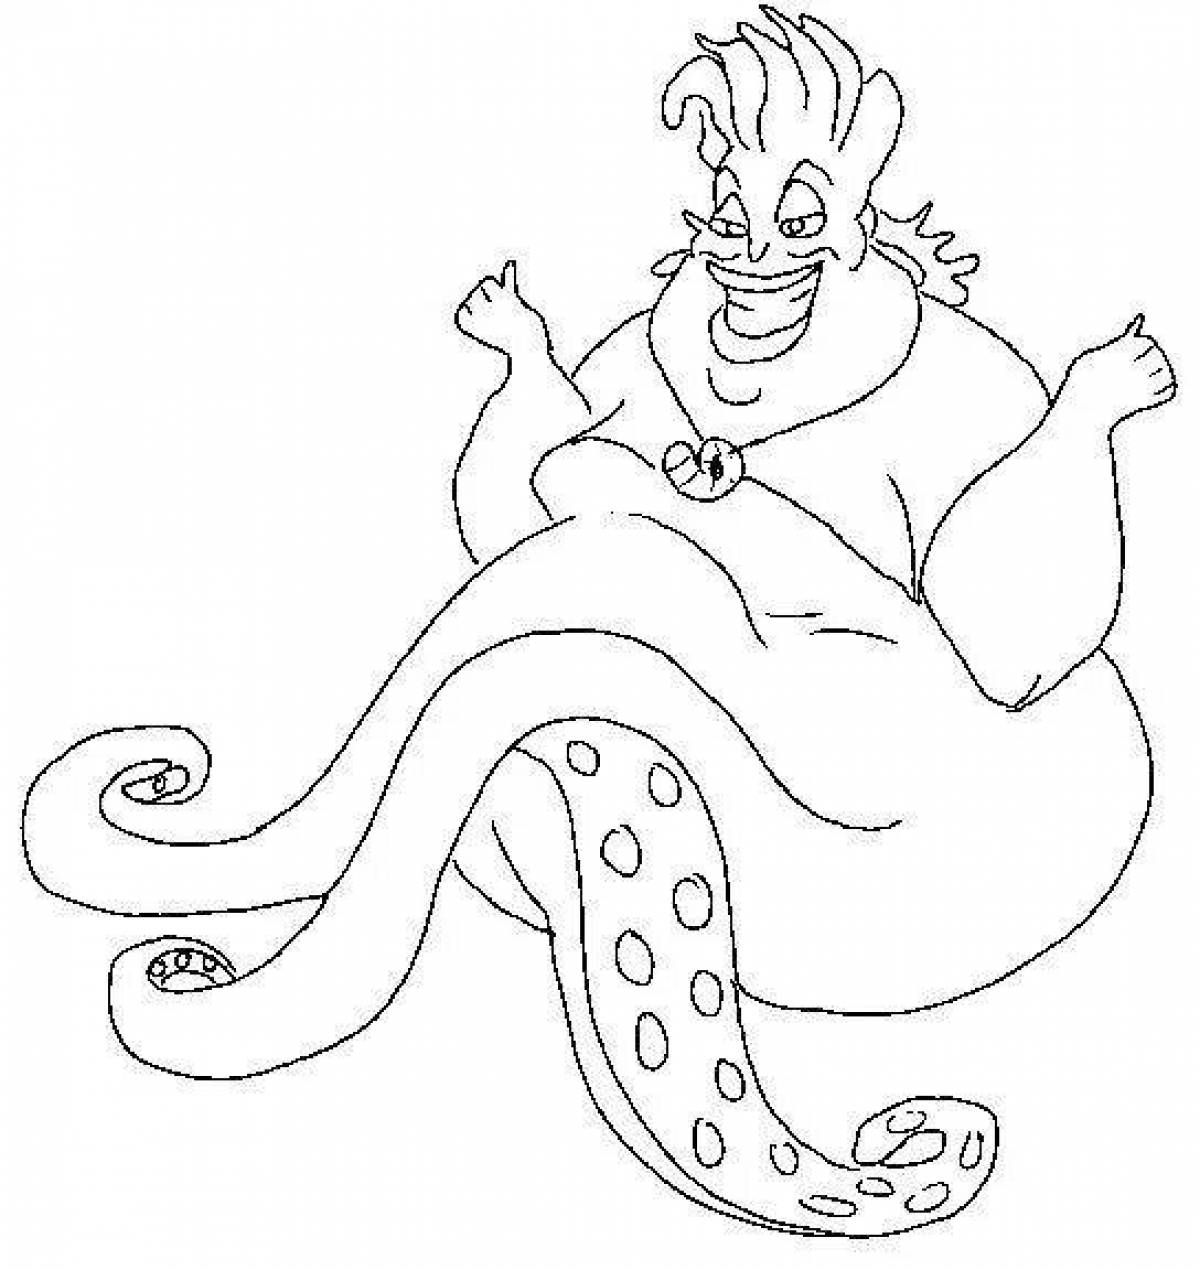 Ursula shining coloring book